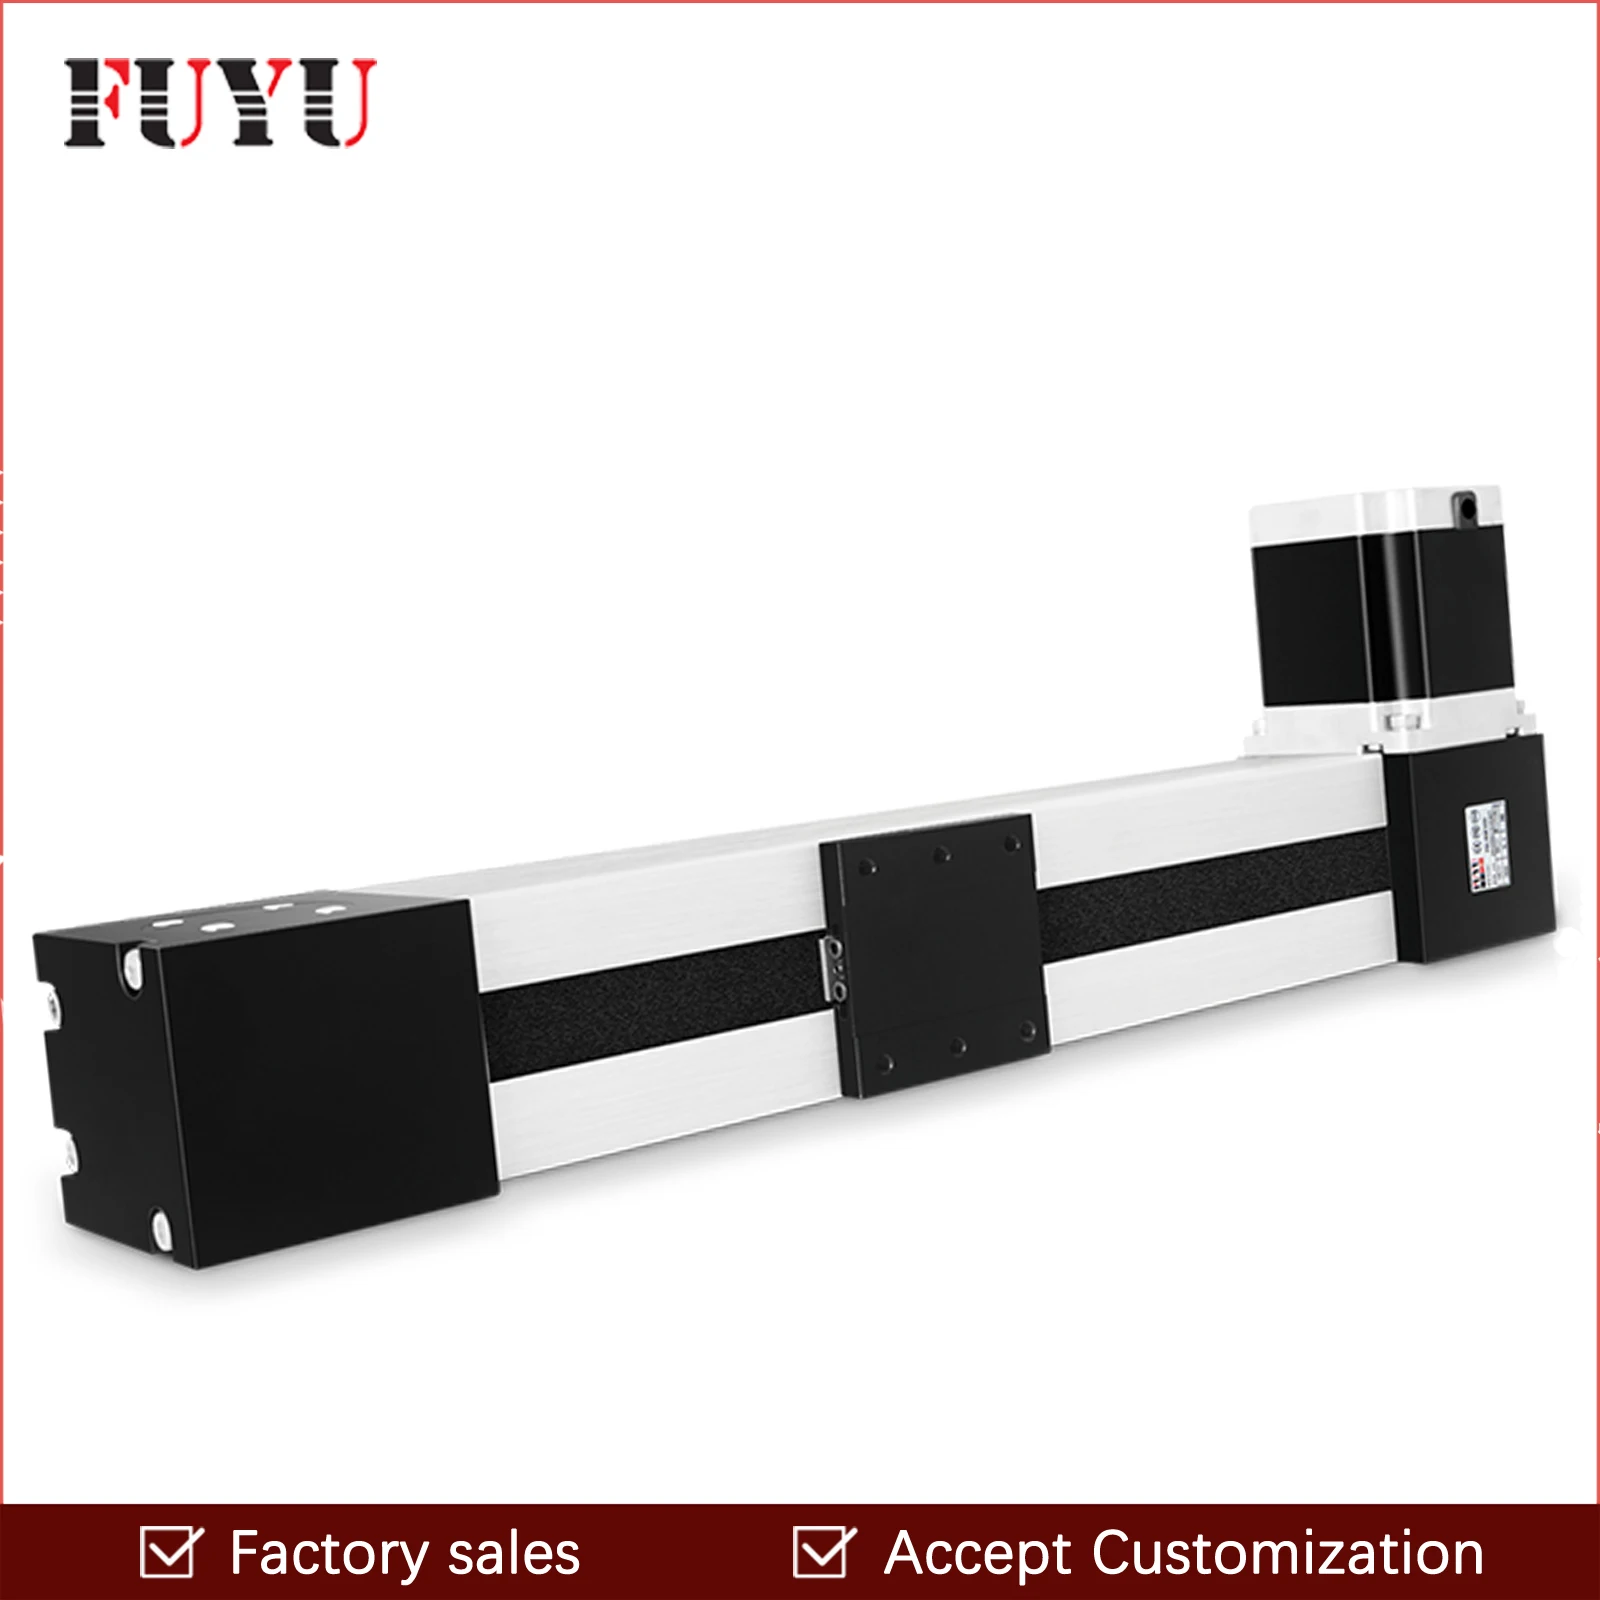 

FUYU High Speed CNC Belt Driven 1500mm Stroke Linear Slide Guide Rail Actuator Motorized Nema 34 For 3d Printer Position Arm Kit